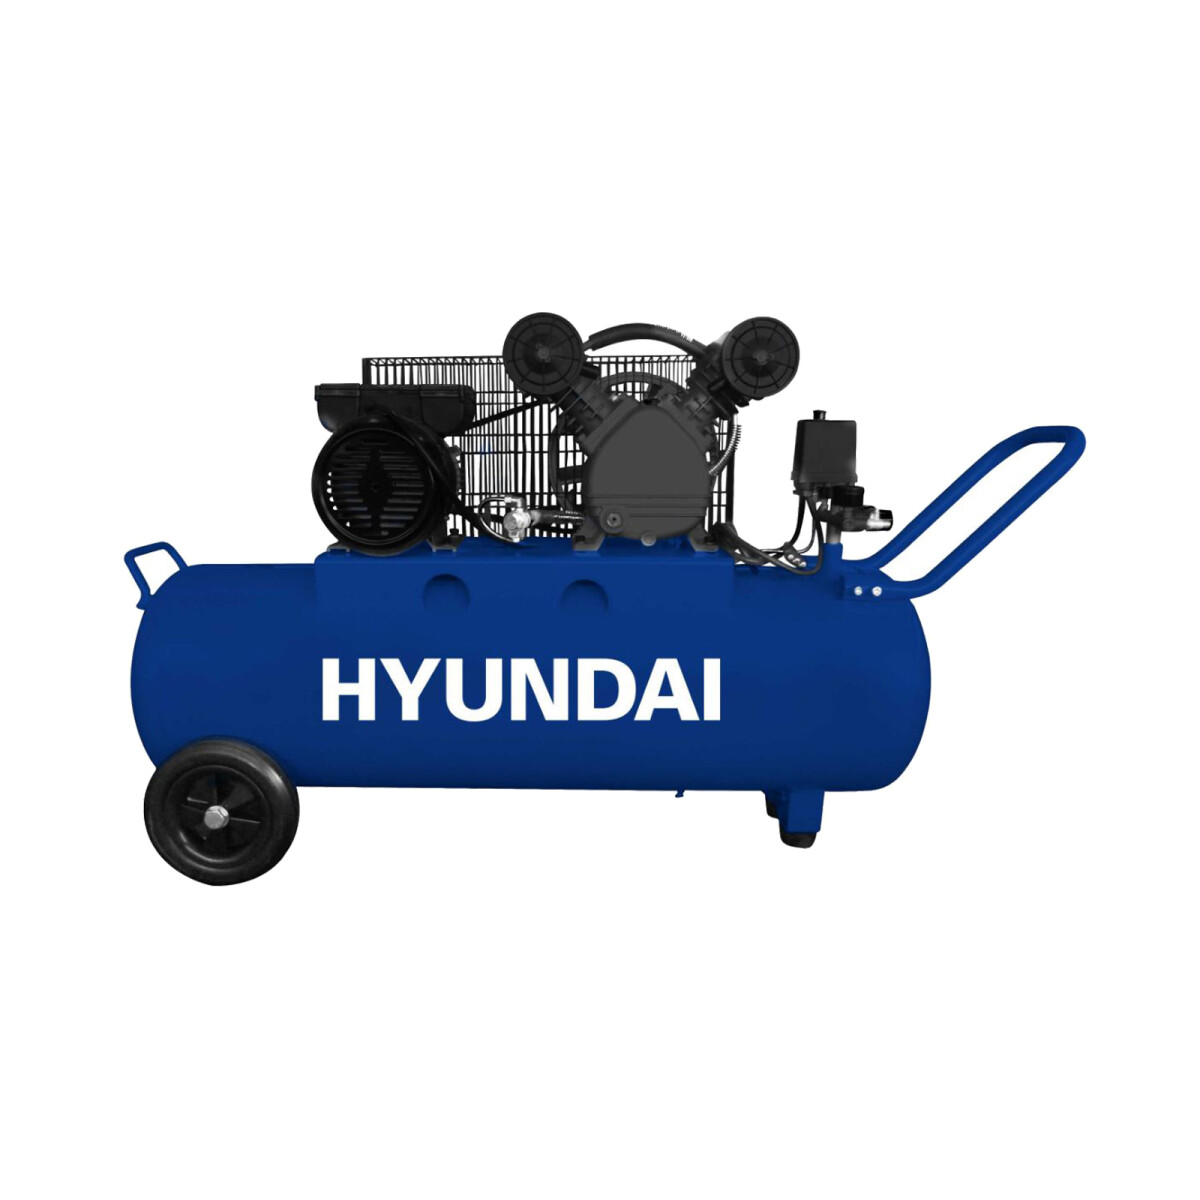 Compresor Hyundai 200l 2.0hp Hyac200c Mo 